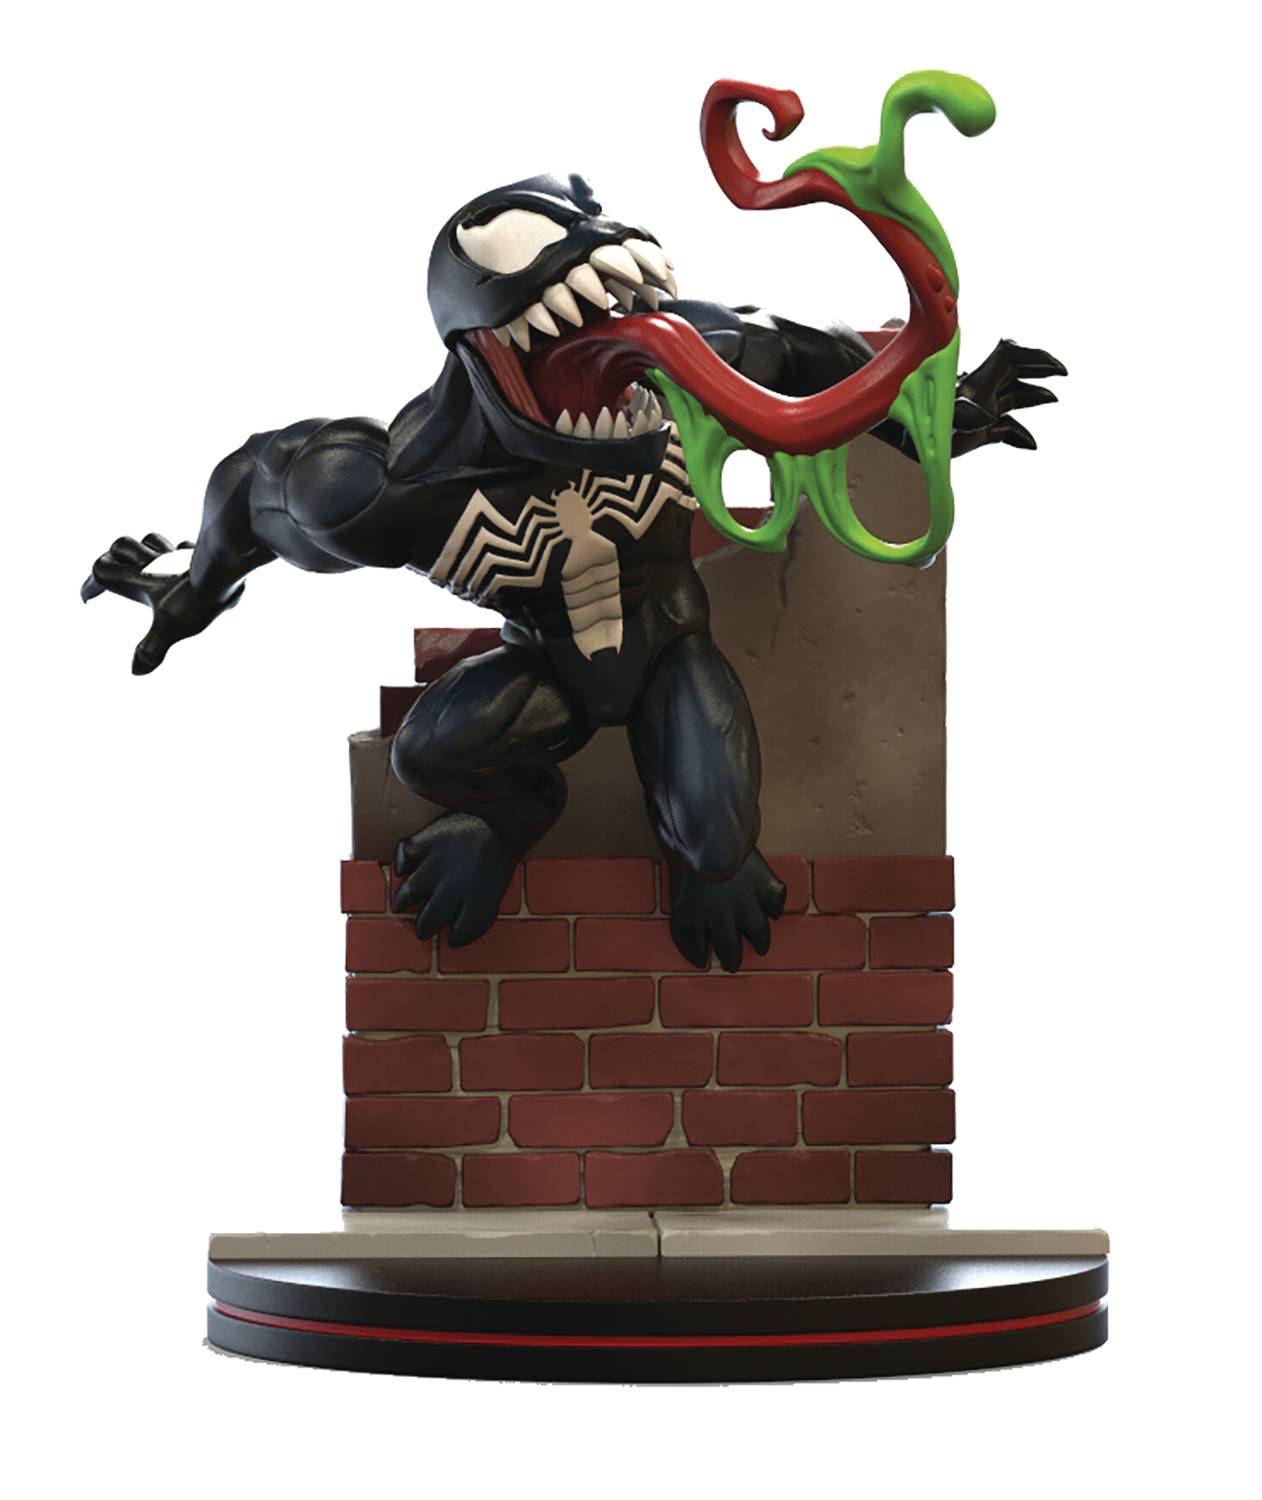 Marvel Venom Q-Fig Diorama Figure